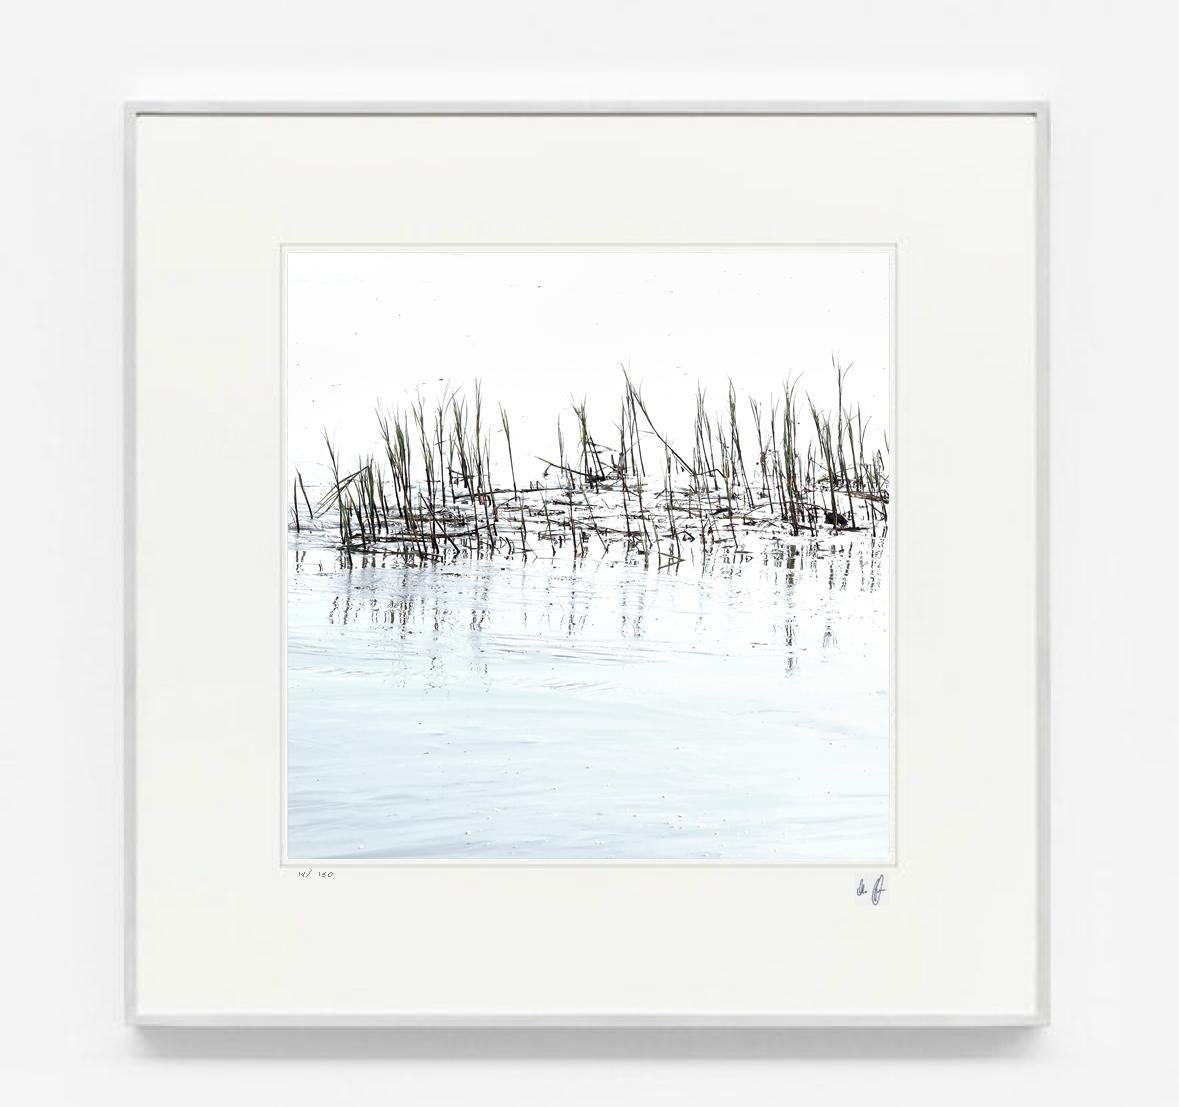 Michael Götze Landscape Photograph - Elbgrass - contemporary abstract photography of beach flora and sea